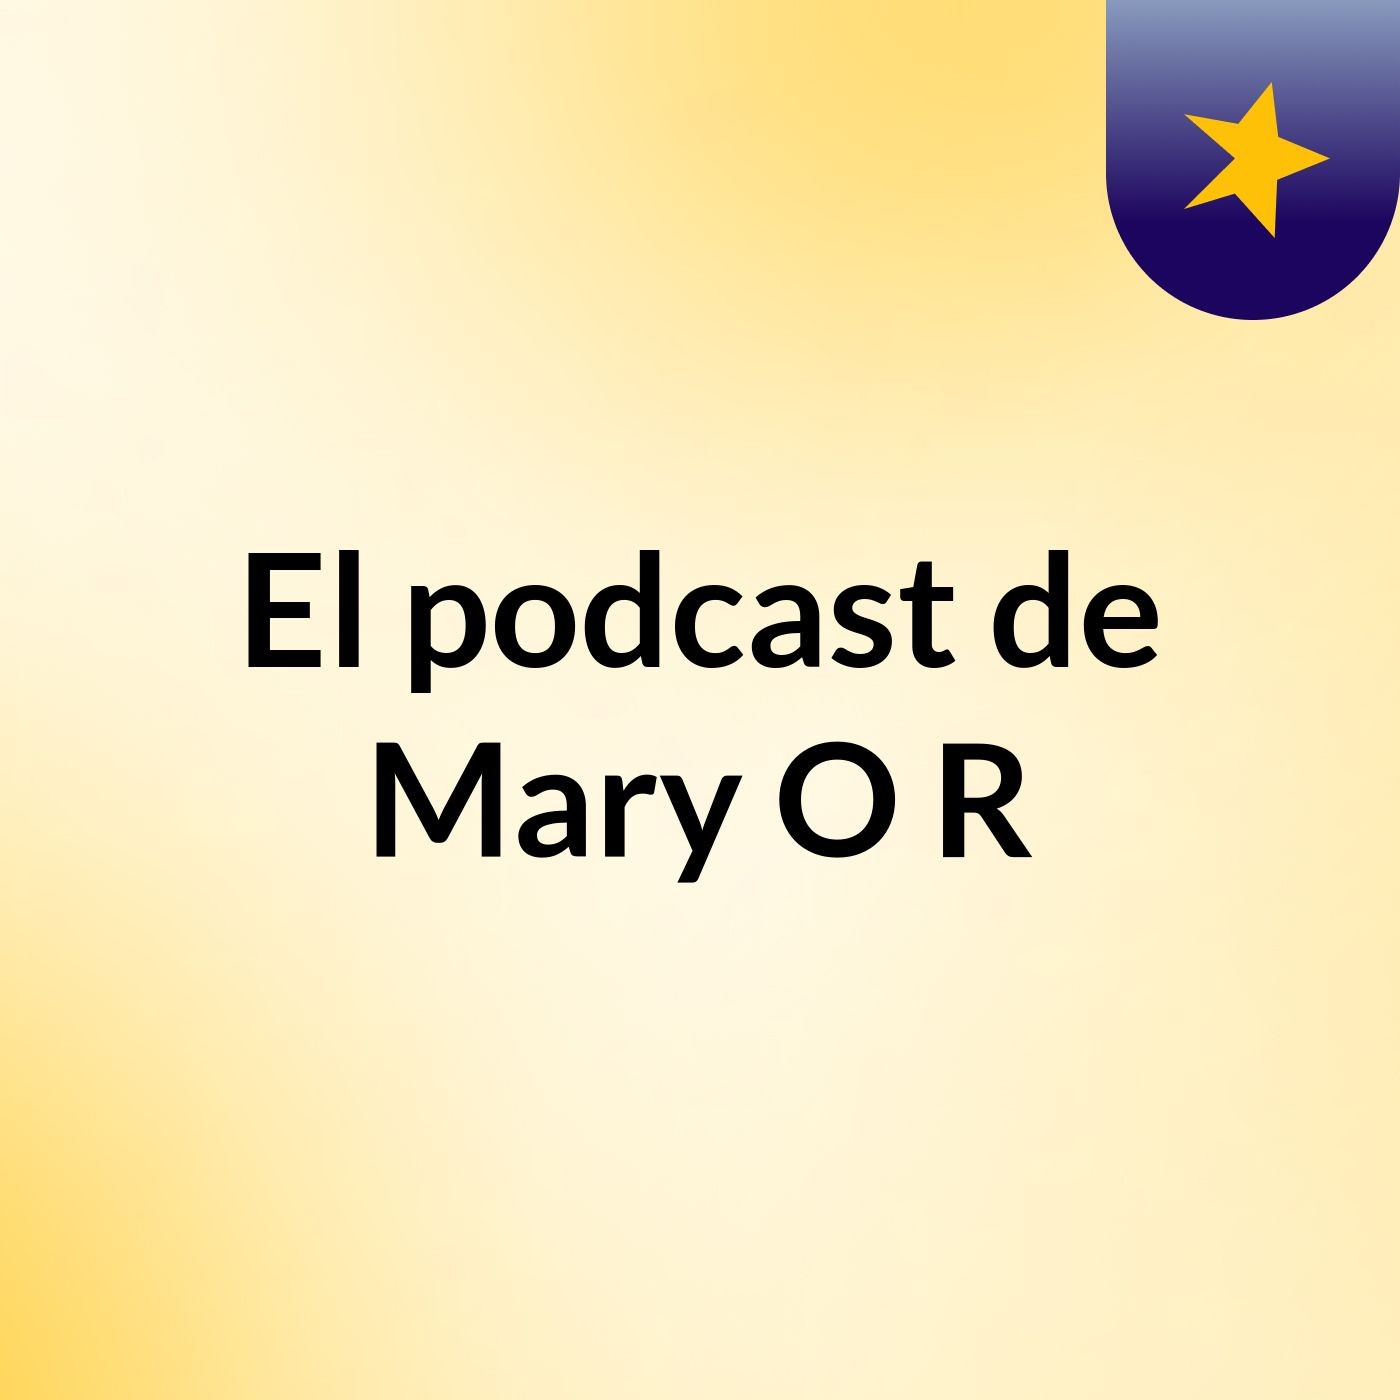 El podcast de Mary O'R